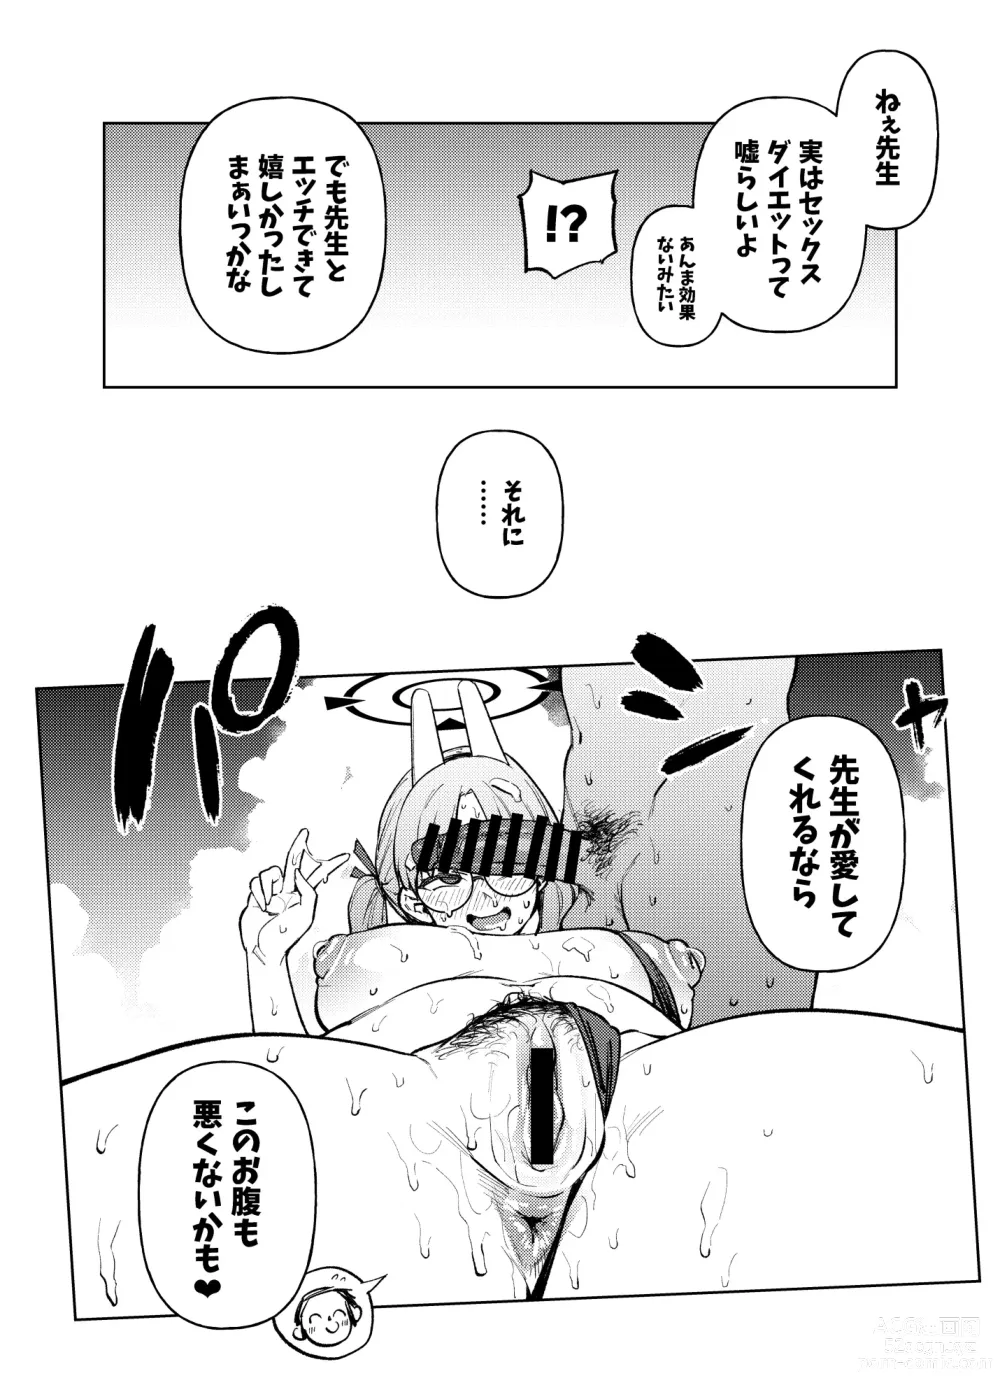 Page 19 of doujinshi Moe to issho ni daietto!!